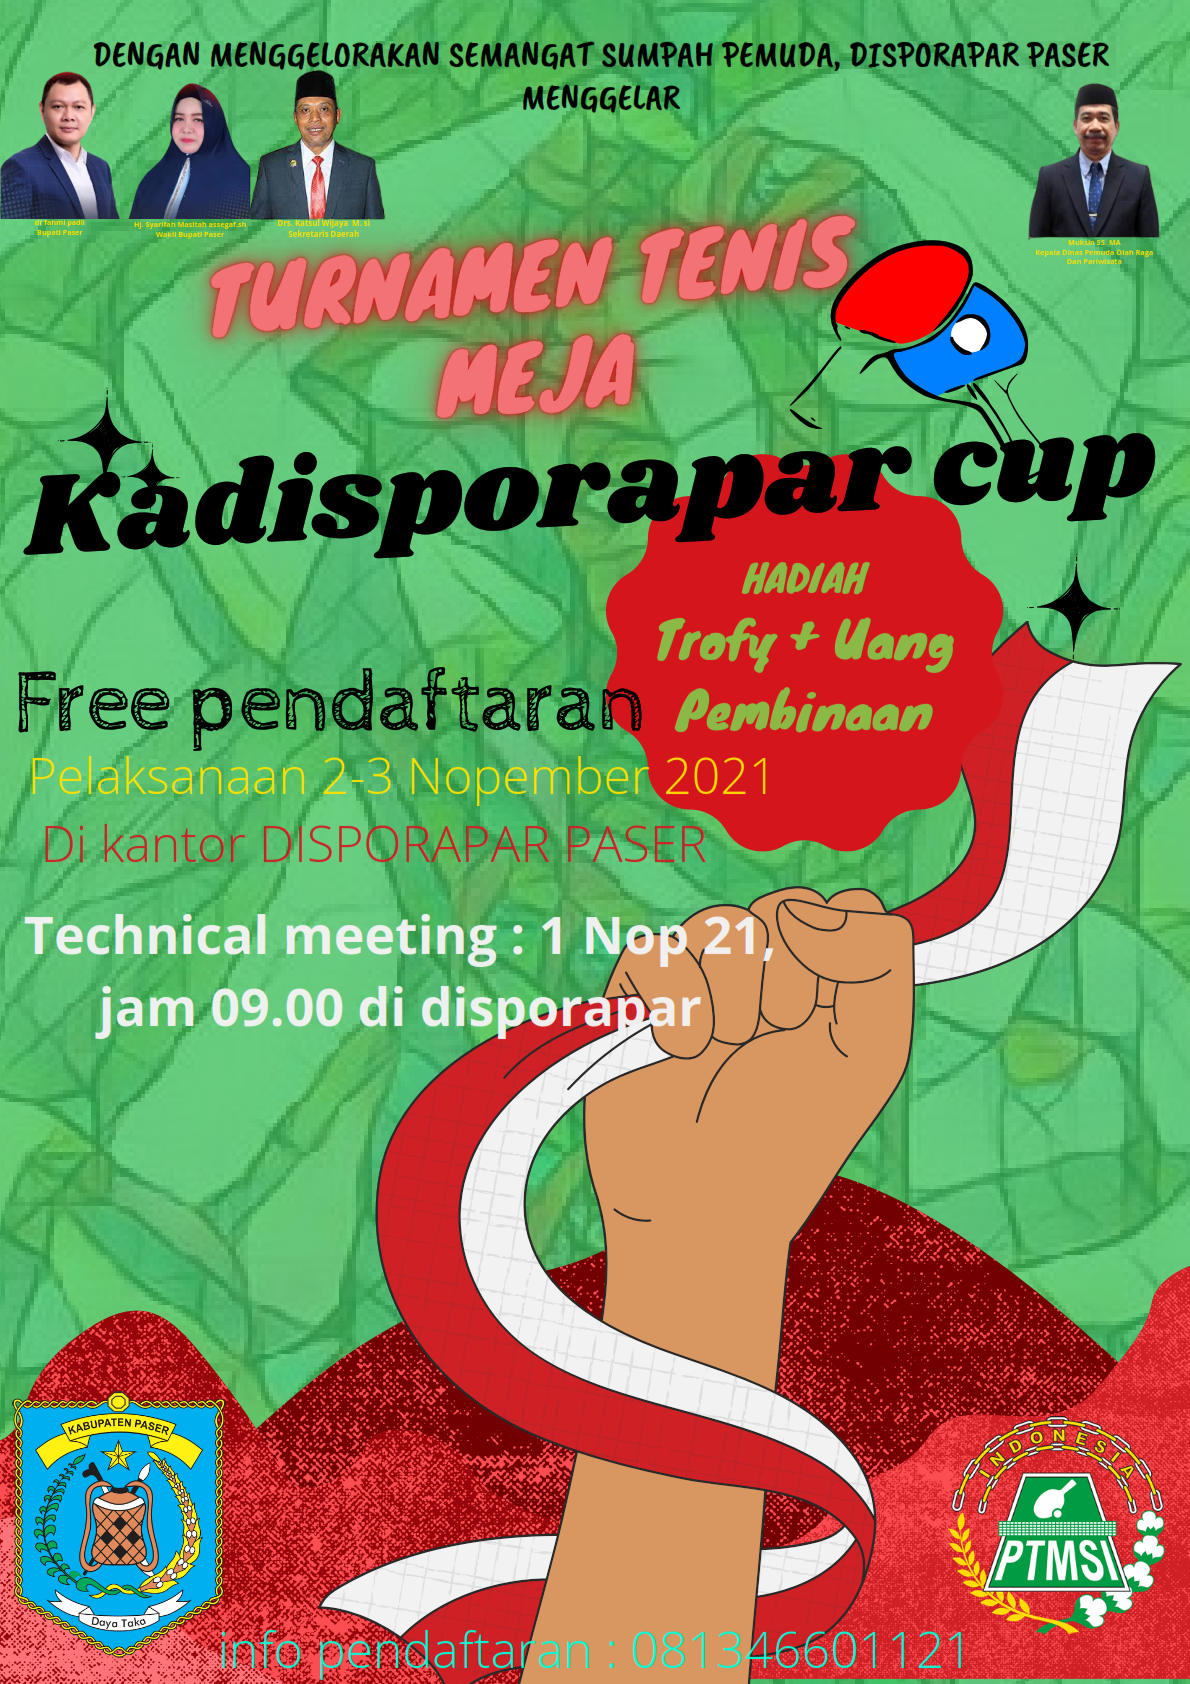 Turnamen Tenis Meja Kadisporapar Cup